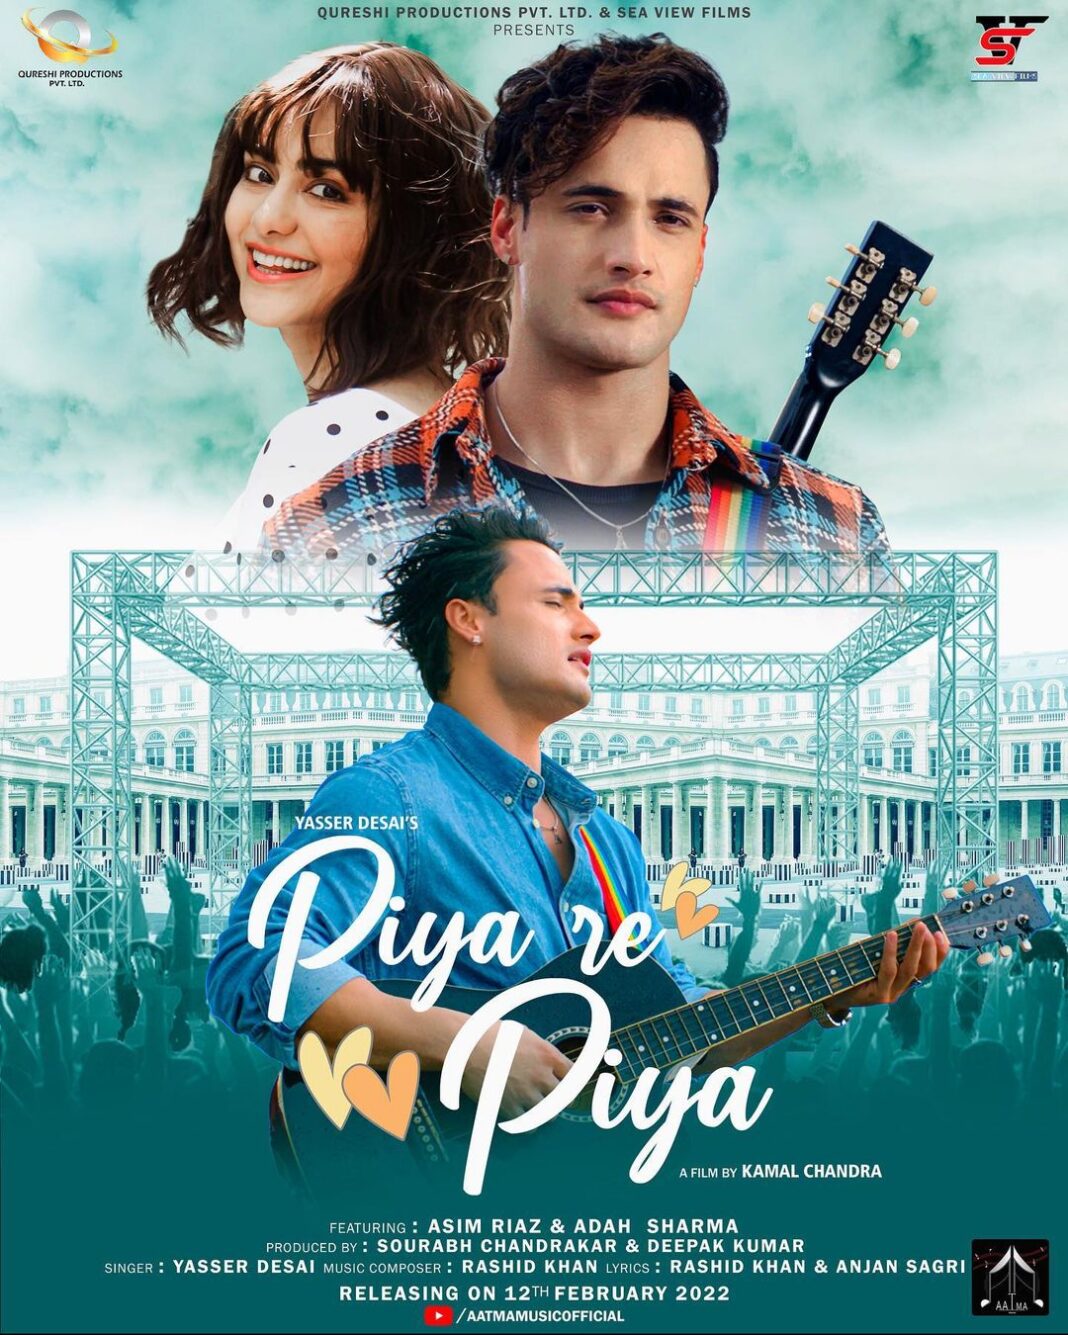 Adah Sharma Instagram - This Valentine’s Day come fall in love with the beautiful romantic track “Piya Re Piya” releasing on 12th February 2022. @asimriaz77.official FT @adah_ki_adah Singer : @yasserdesai Music : @rashidkhanmusic Music Label : @aatma.music Lyrics : @anjansagri Directed By : @kamalchandra Produced By : Sourabh Chandrakar & Deepak Kumar Created By : @ayyub___qureshi786 & @im_akhtarkhan